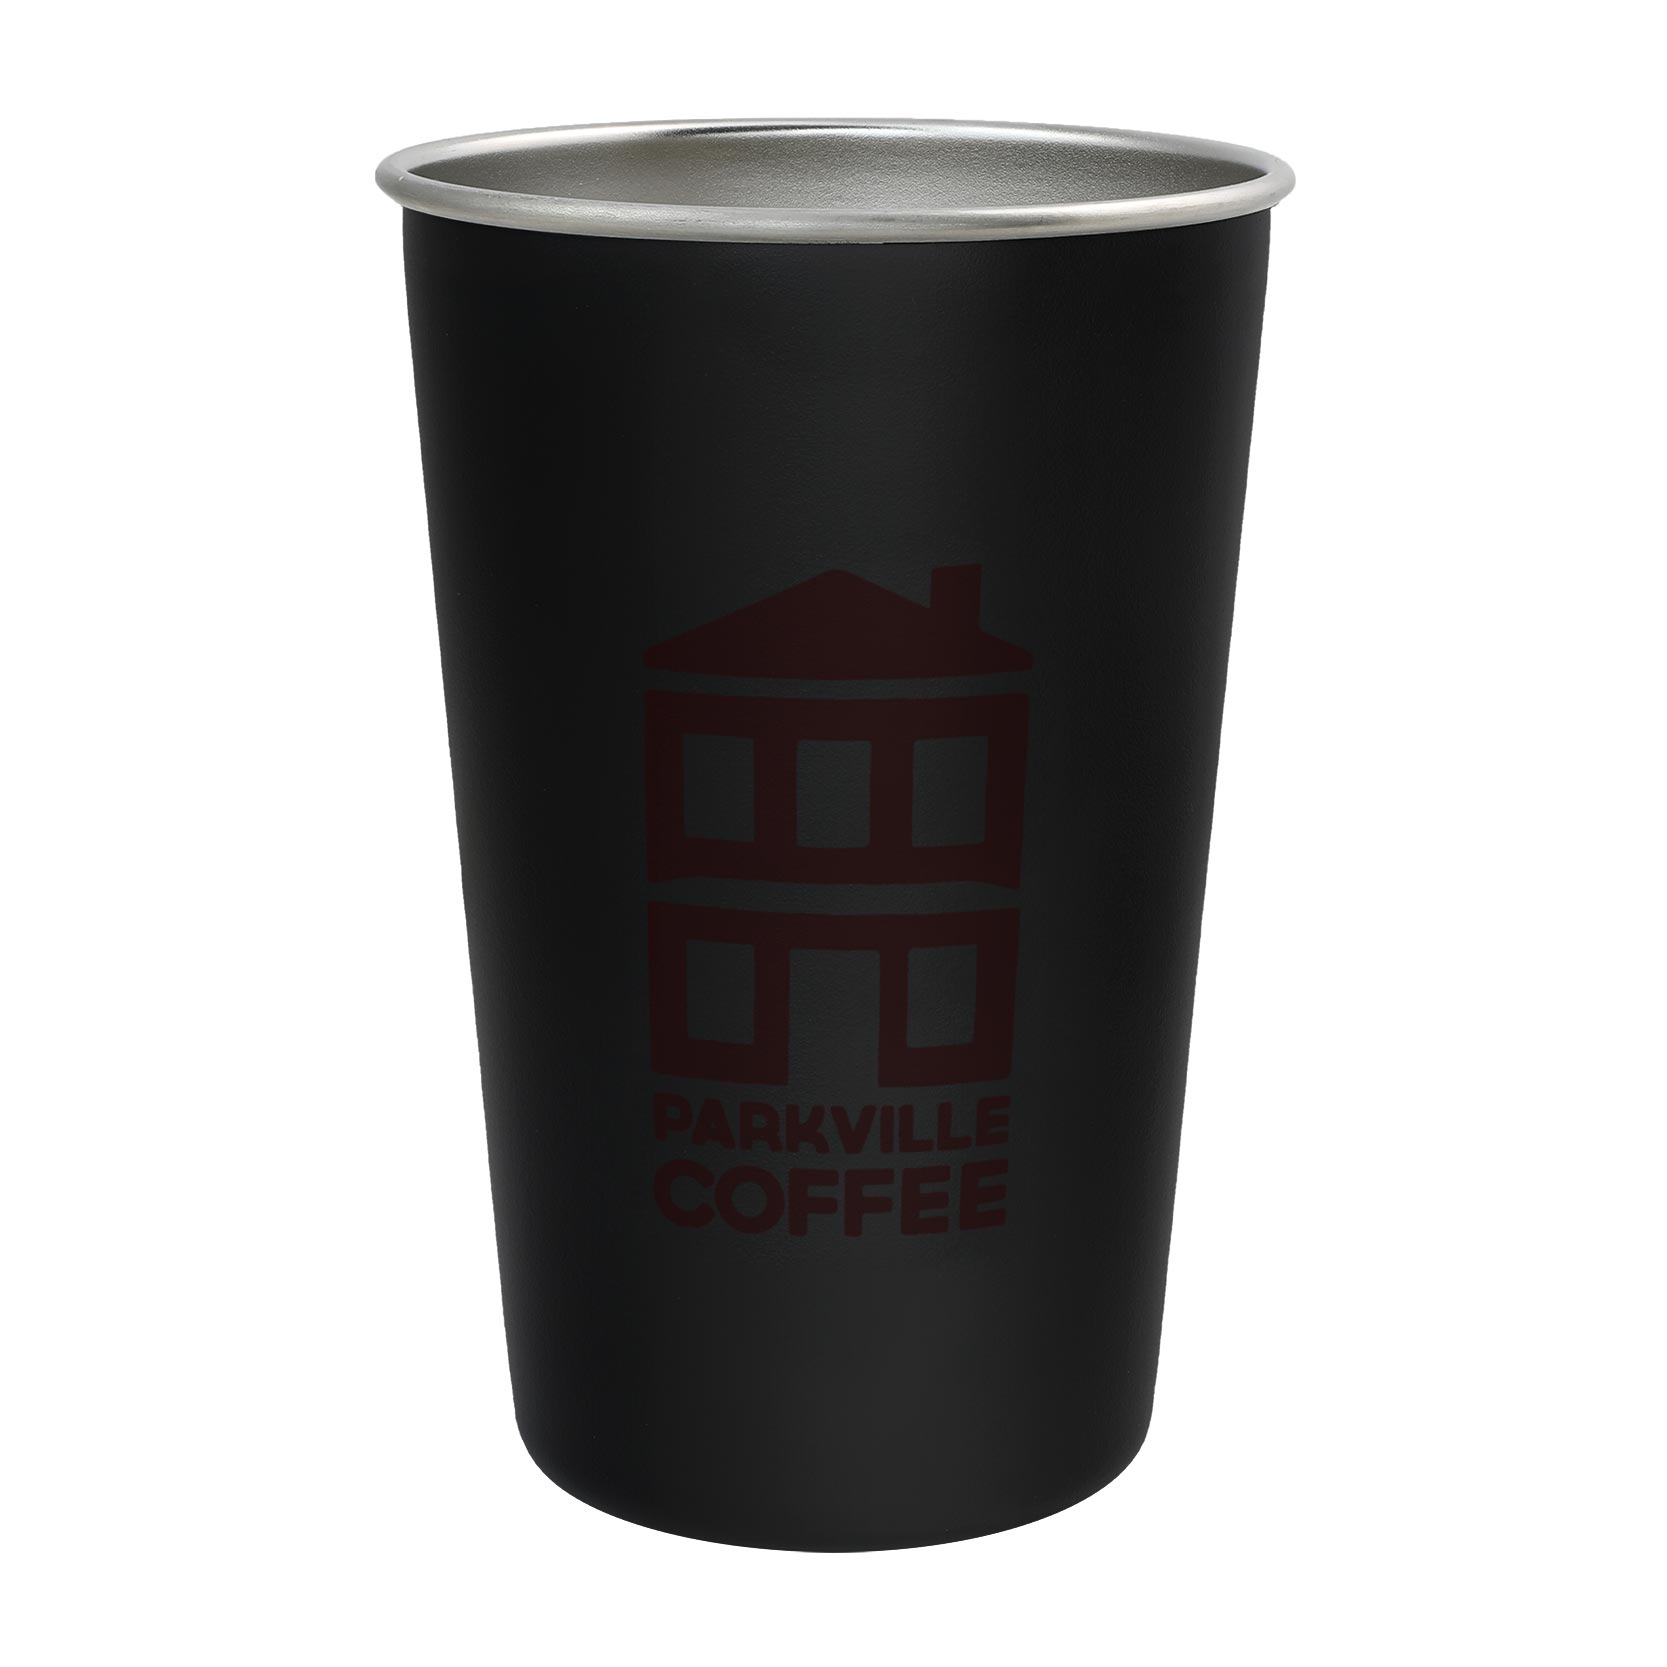 https://parkvillecoffee.com/wp-content/uploads/2020/09/parkville_coffee_aluminum-cup_product.jpg